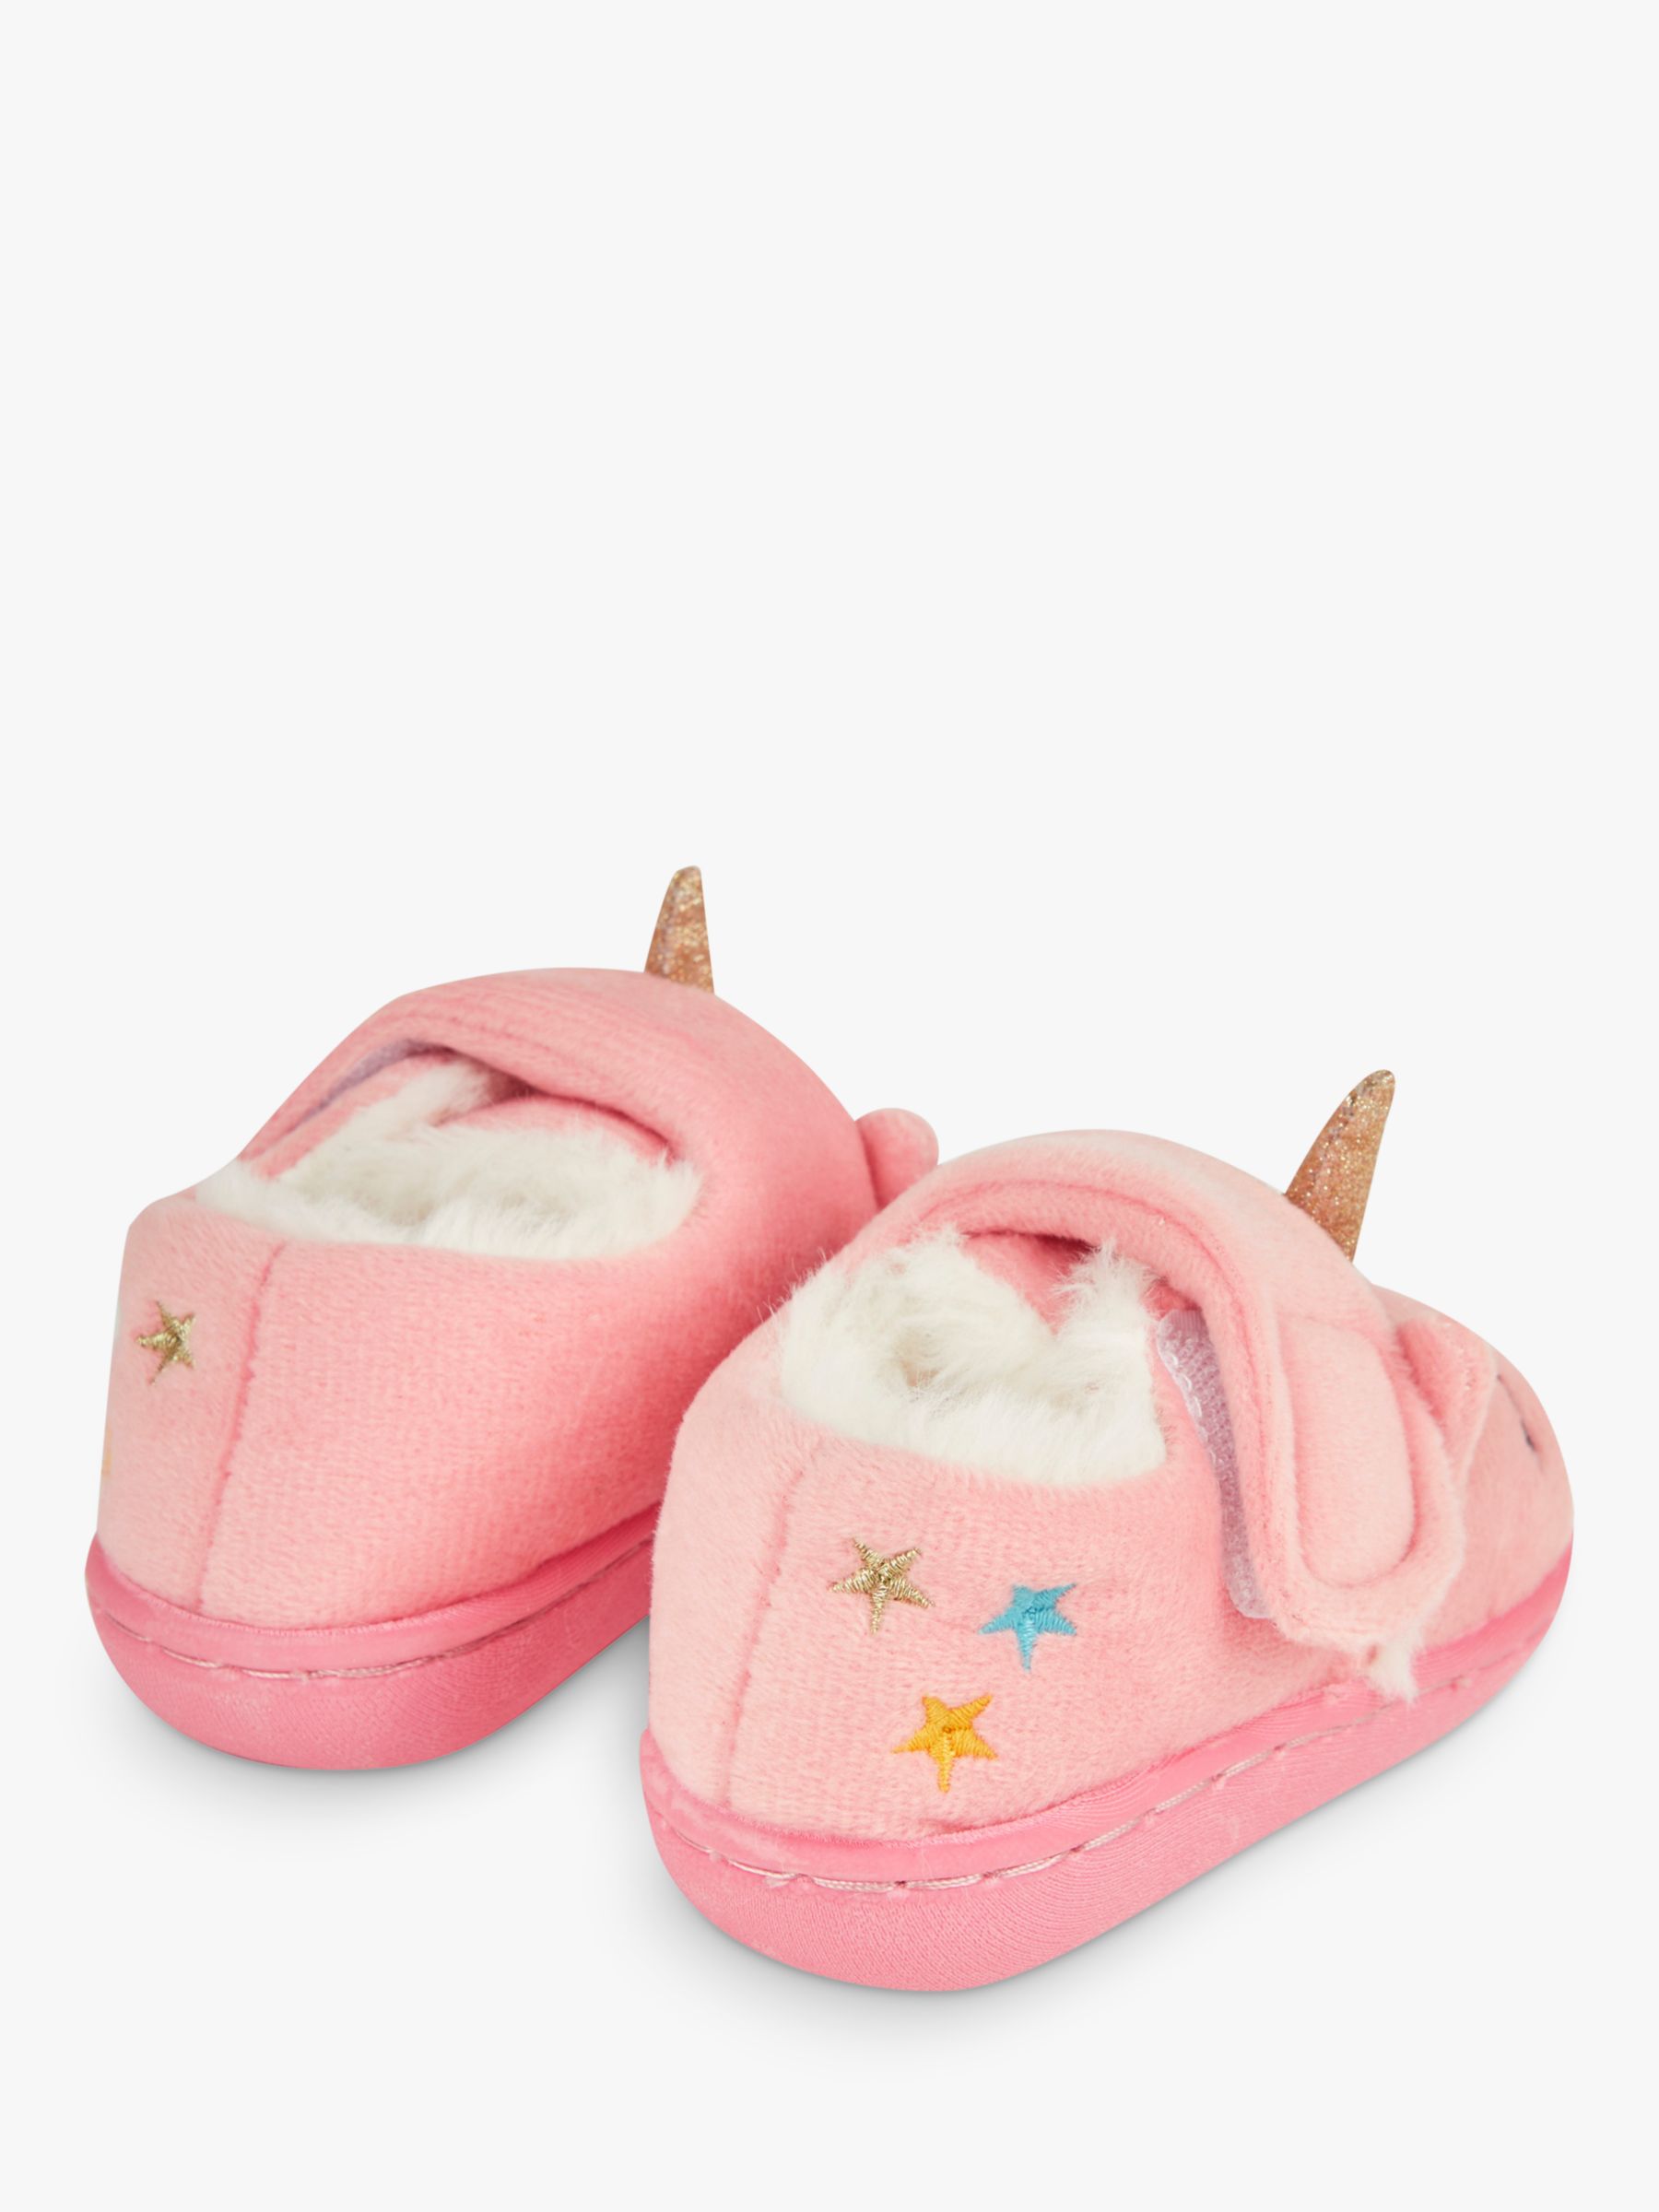 JoJo Maman Bébé Unicorn Easy-On Slipper Shoes, Pink/Multi, 0-6 months